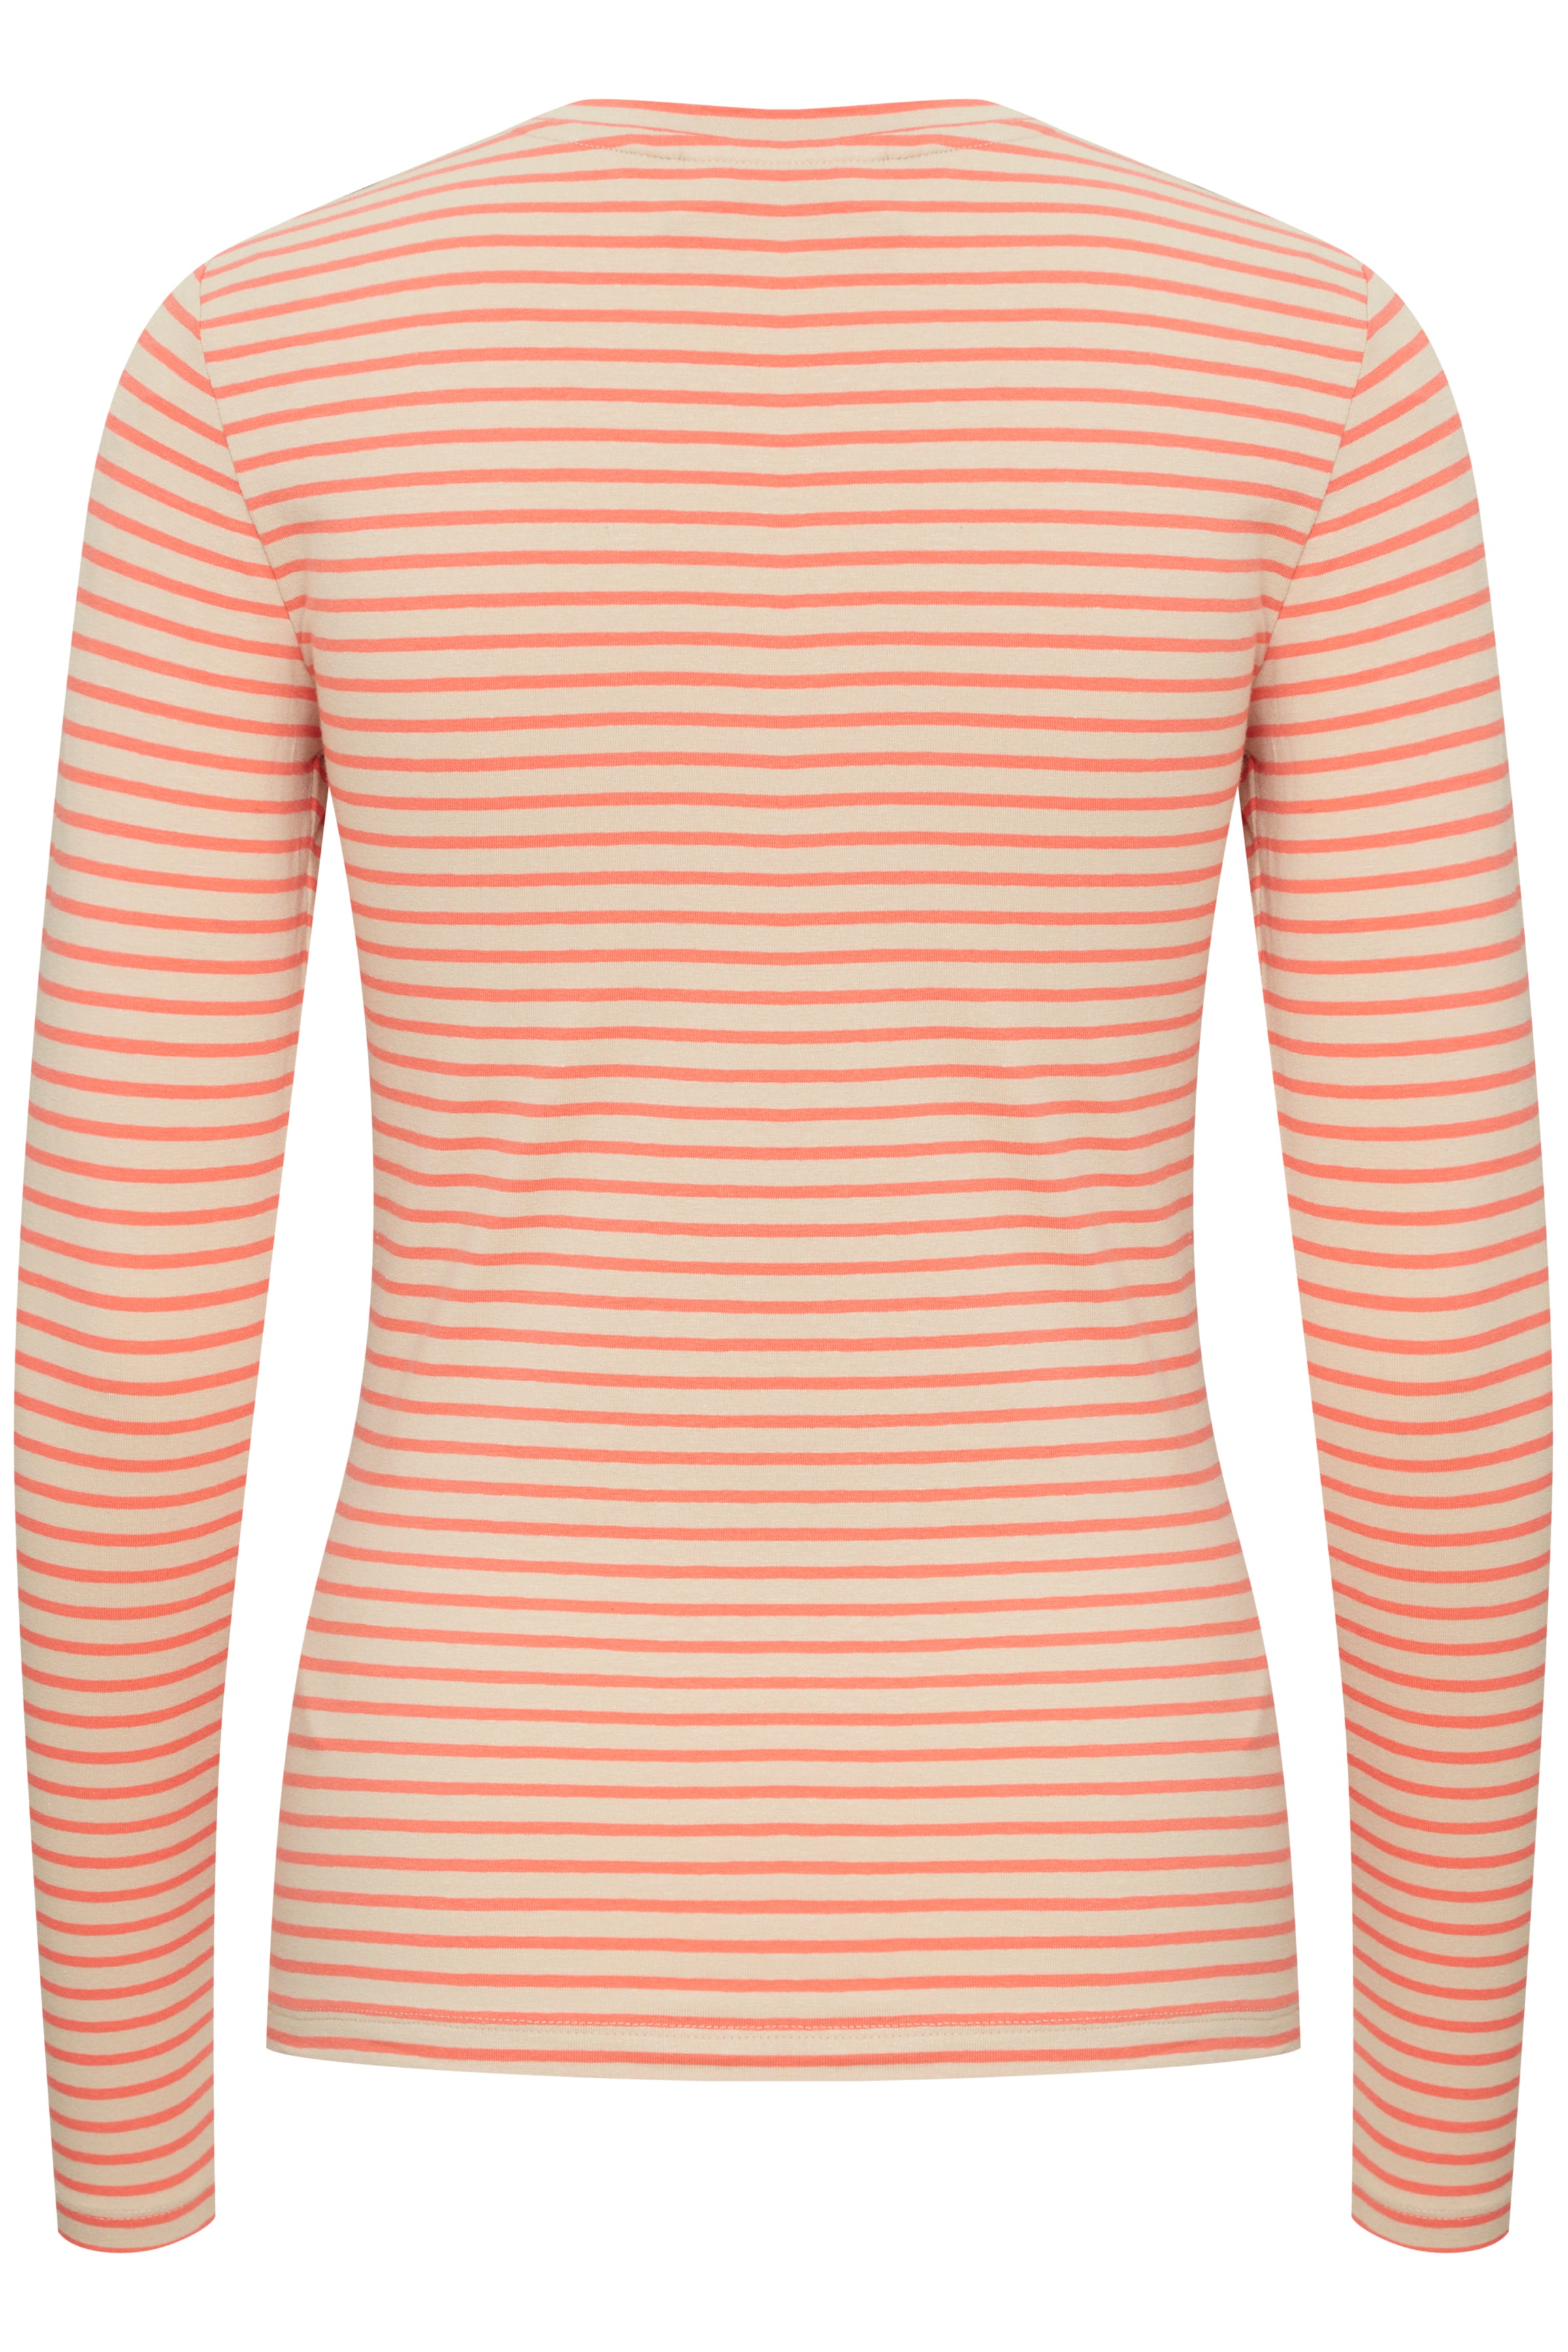 IHMira Long Sleeve T Shirt - Coral